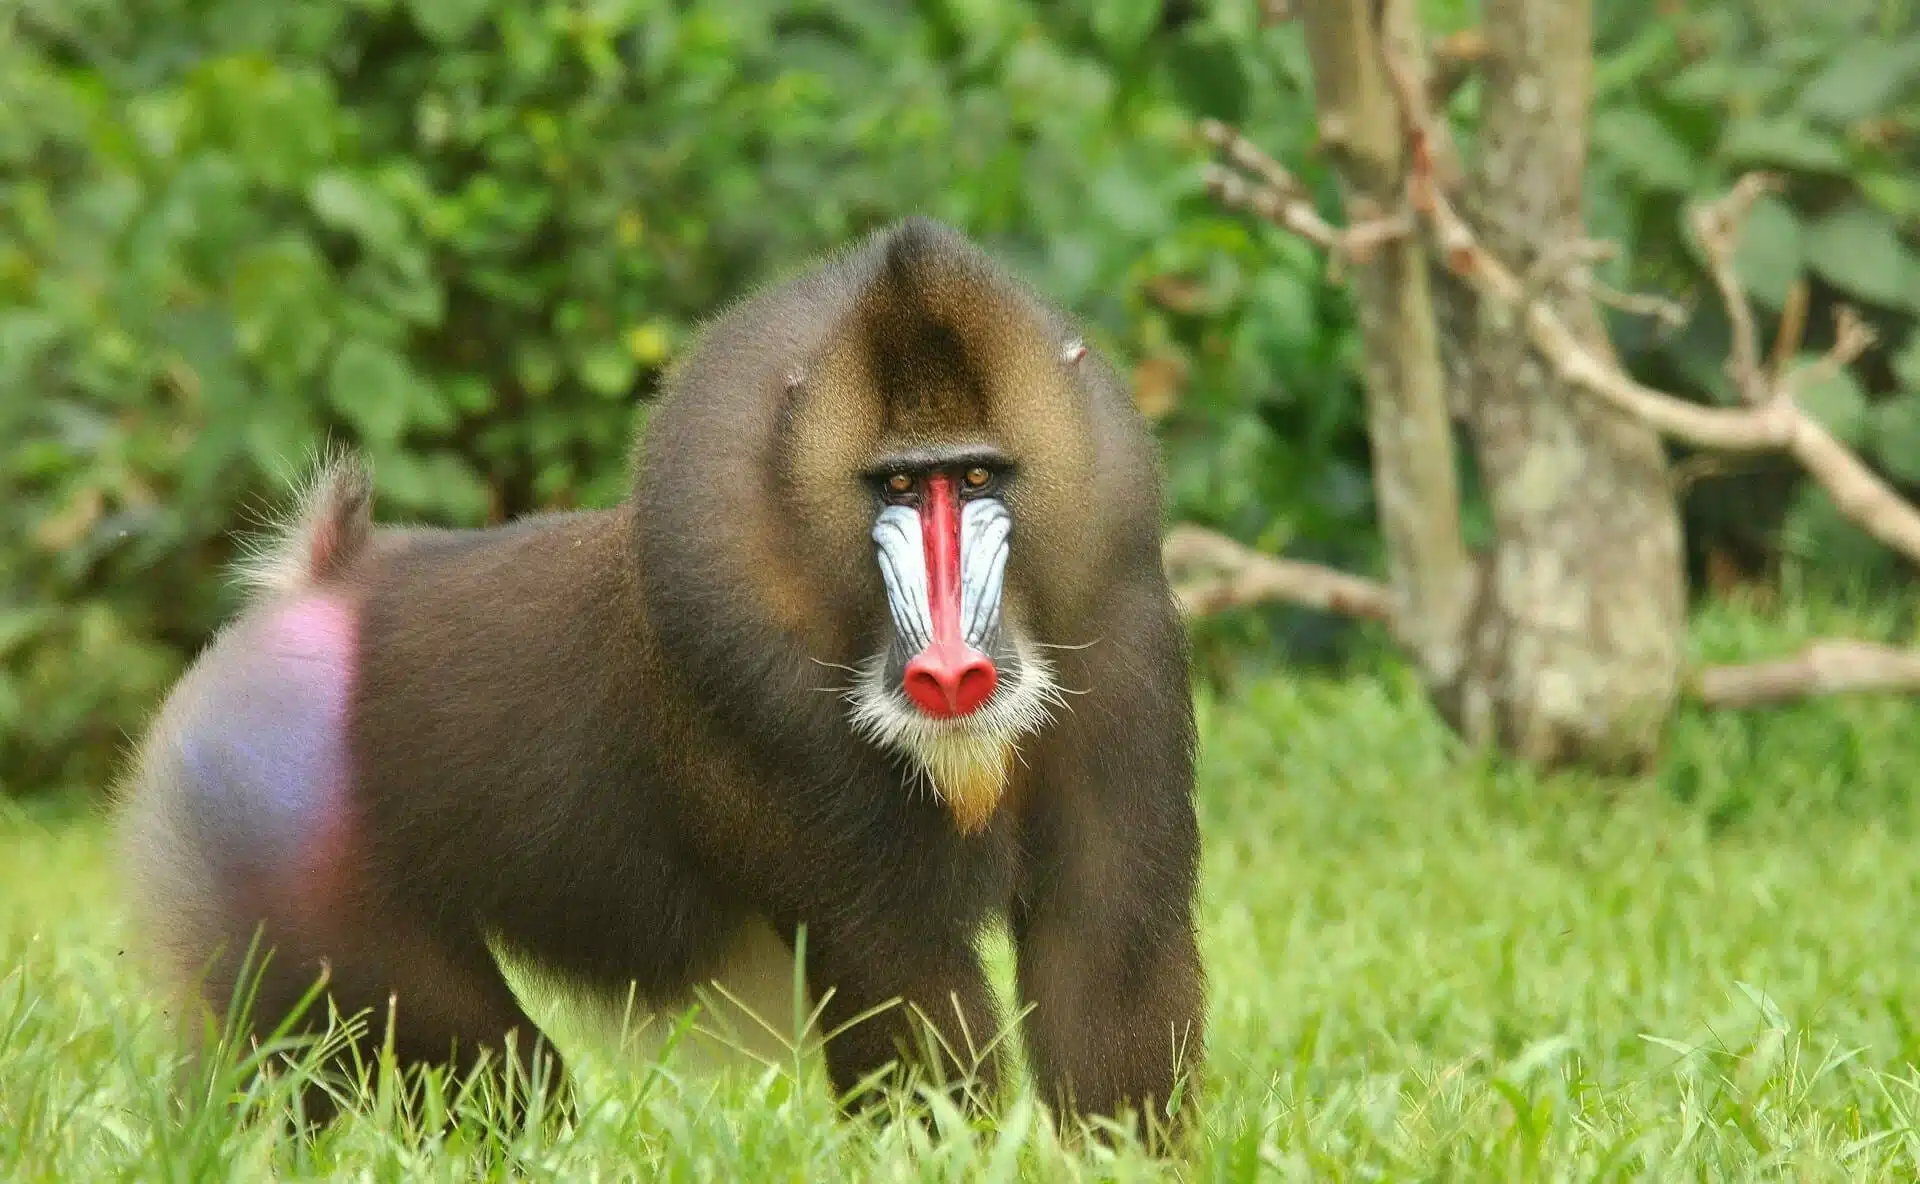 The Mandrill Monkey walking on grass